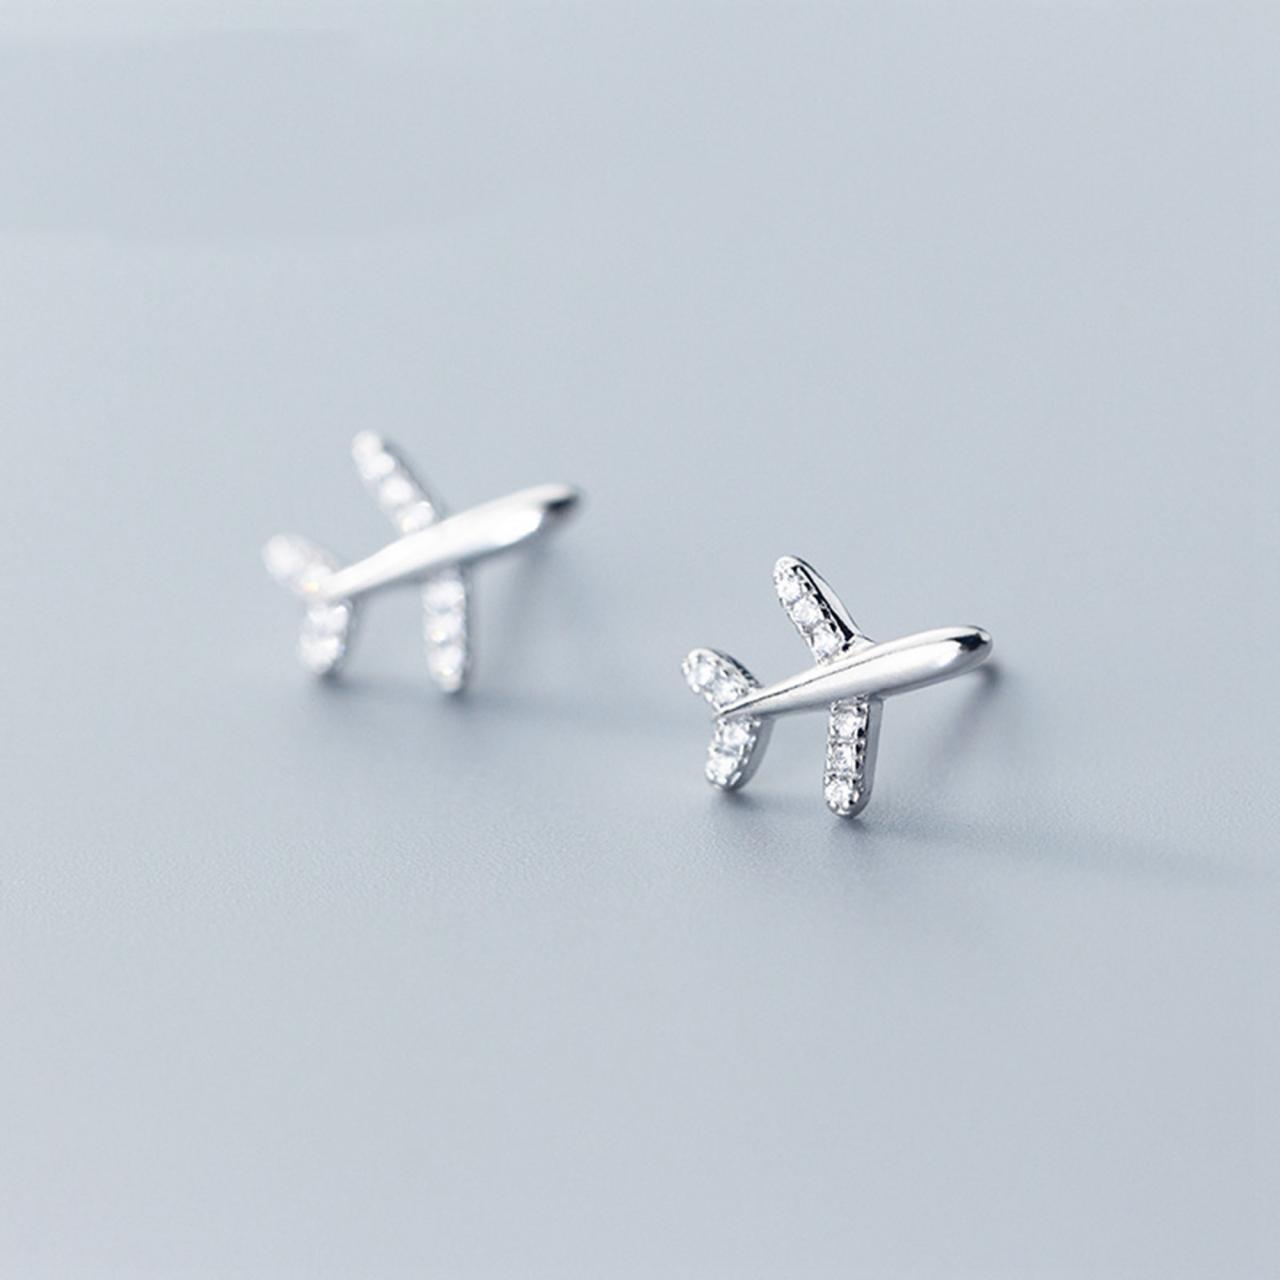 Sterling Silver Airplane Ear Stud, Silver Aircraft Ear Post, Travel Earrings, Sky Post Earrings